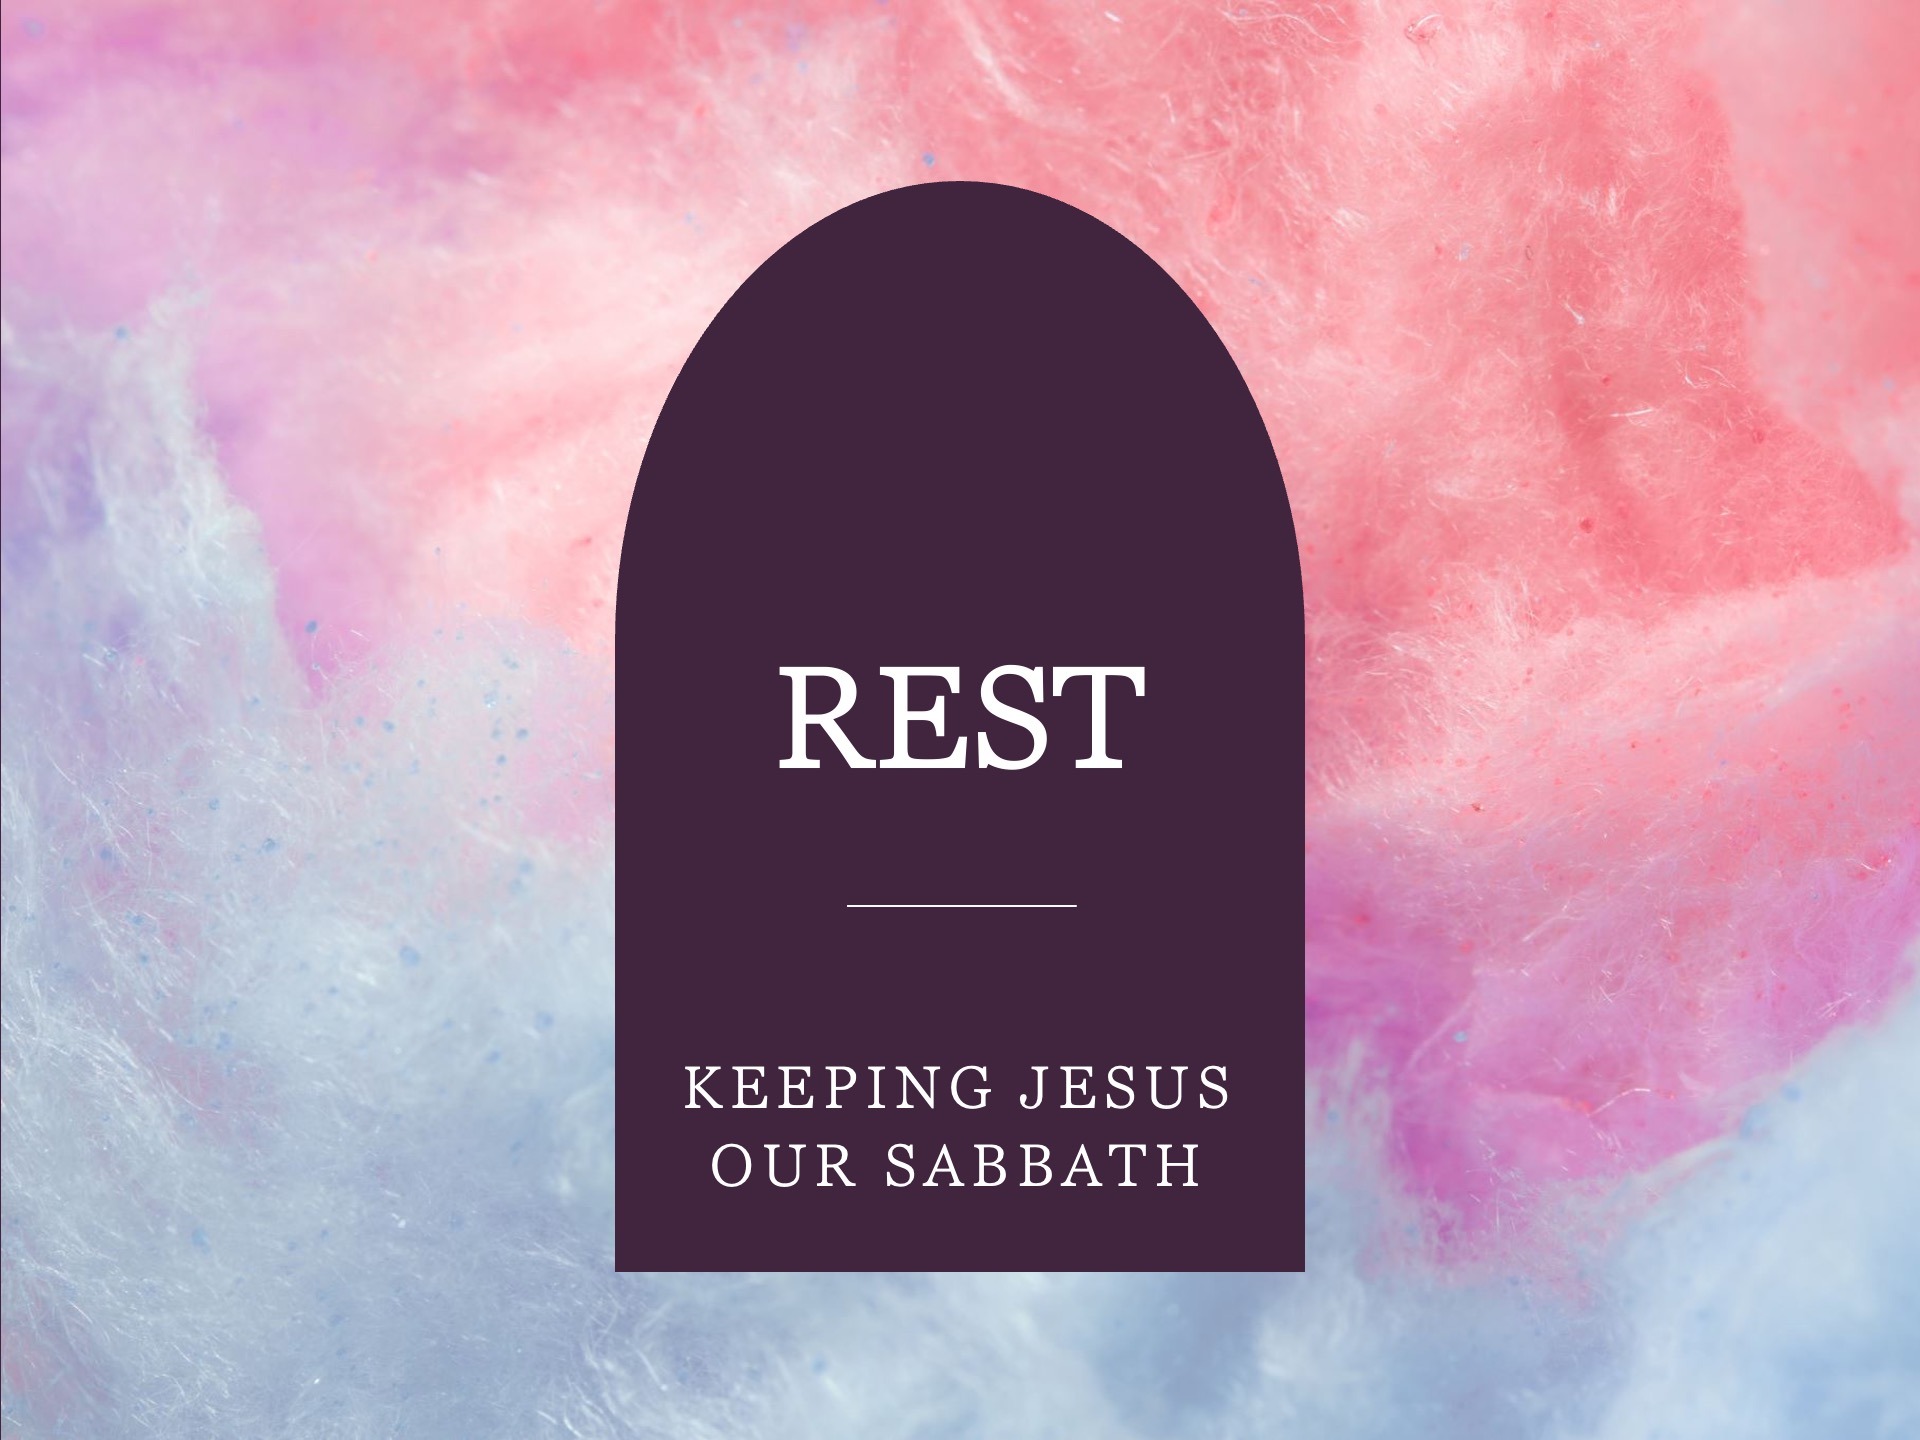 Endure unto Rest